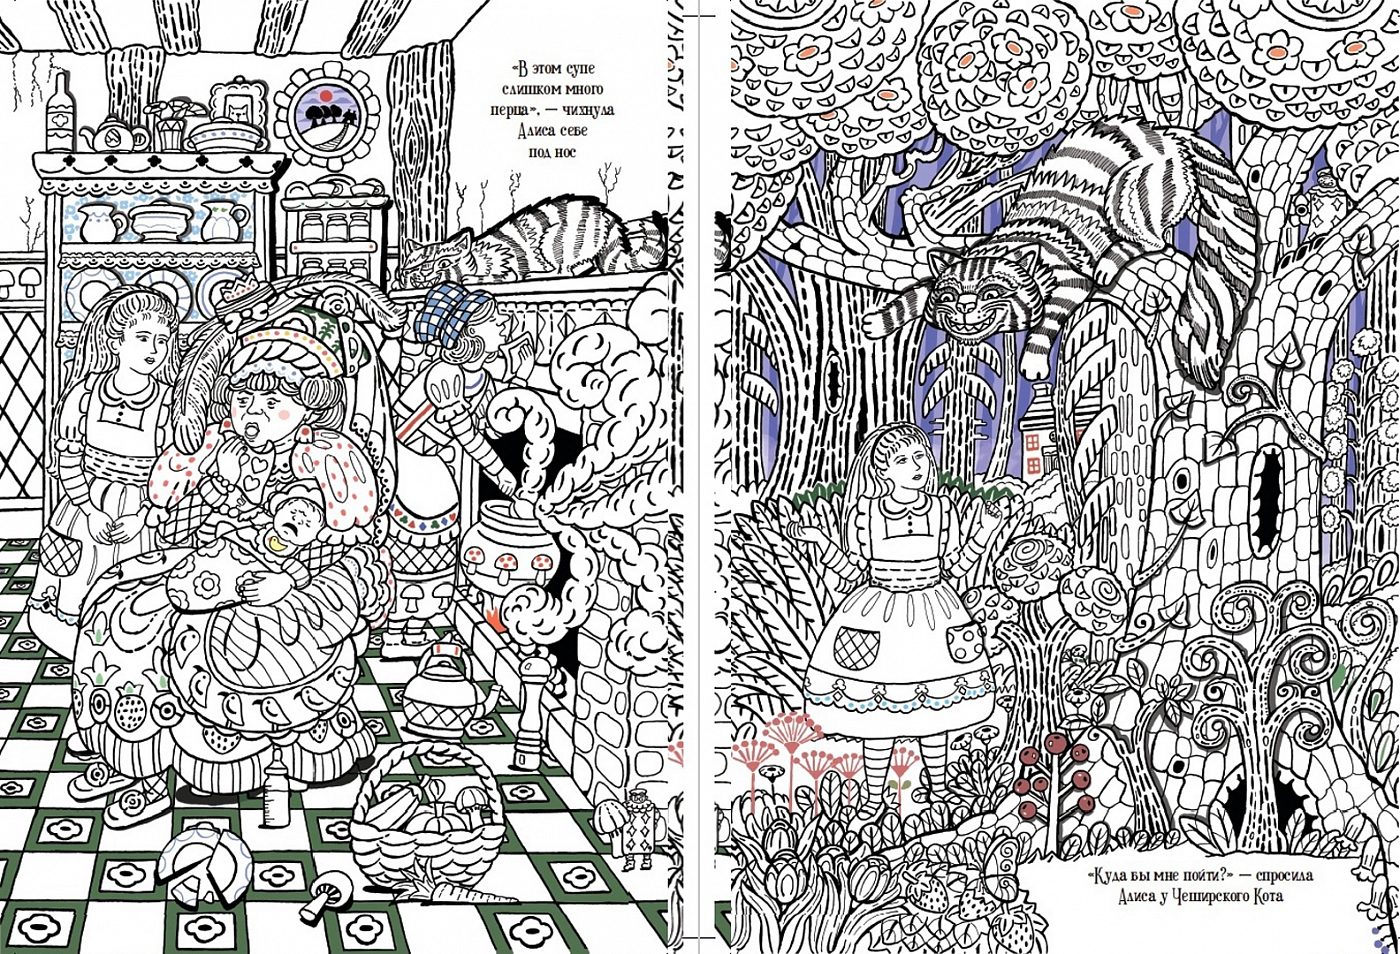 Алиса в Стране чудес - Иллюстрации к сказке «Алиса в Стране чудес», рисунки Джона Тенниела